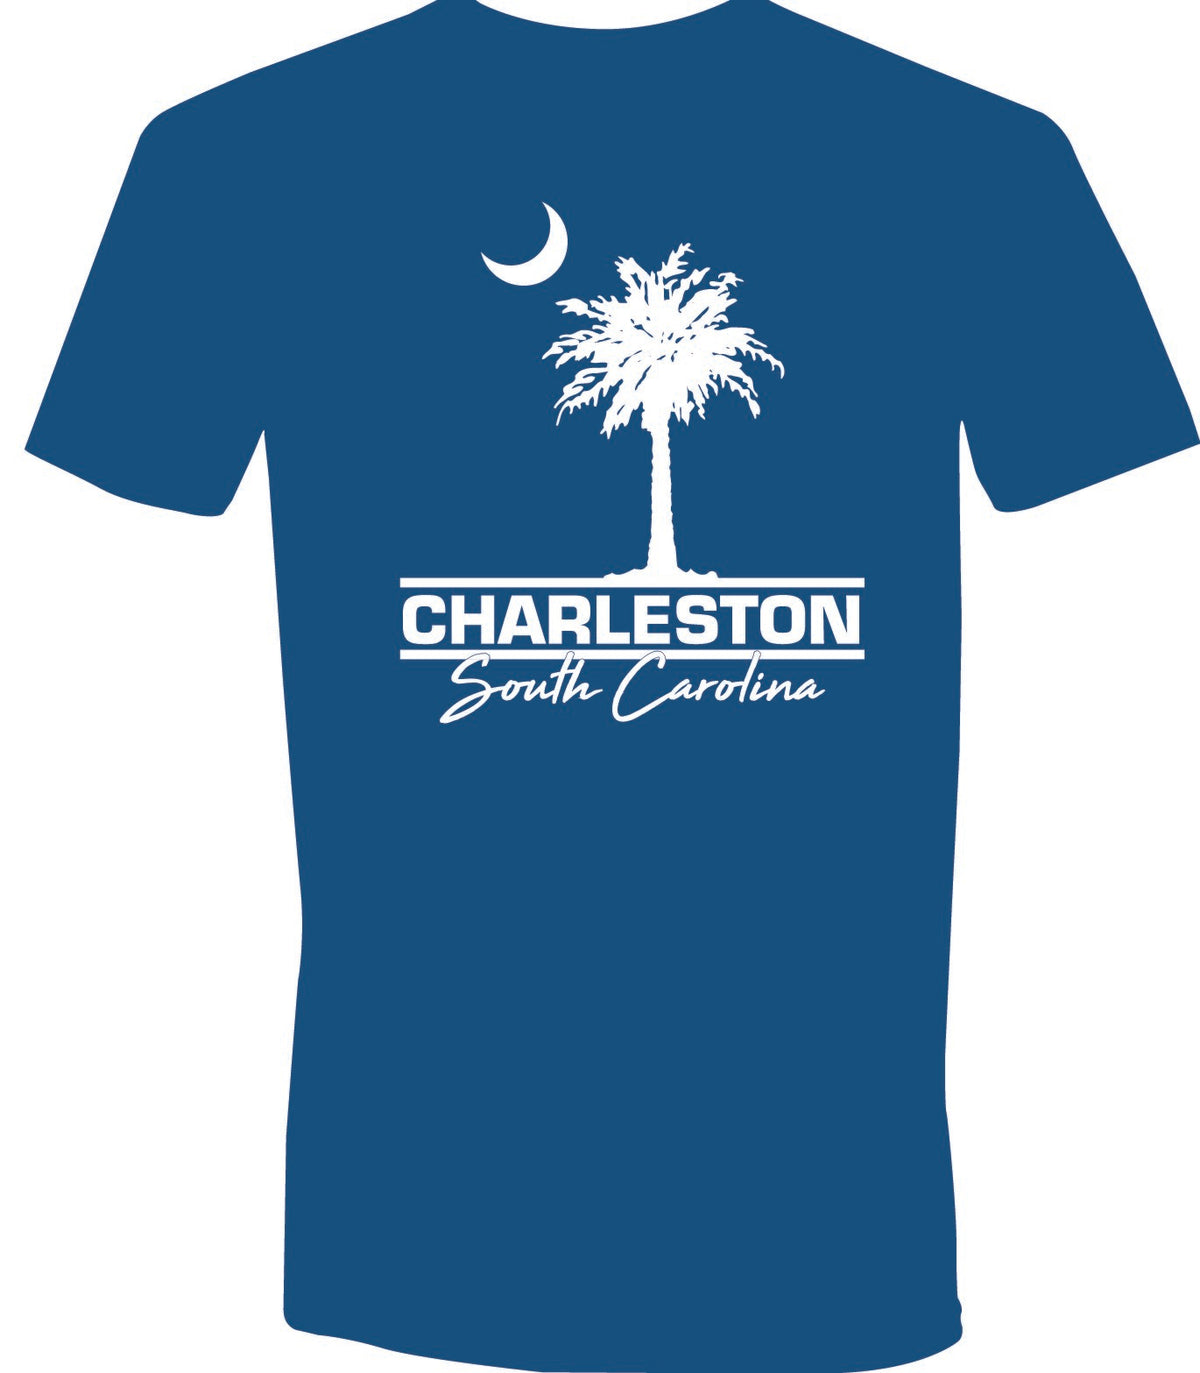 Charleston Palm Short Sleeve T-Shirt in indigo with white logo